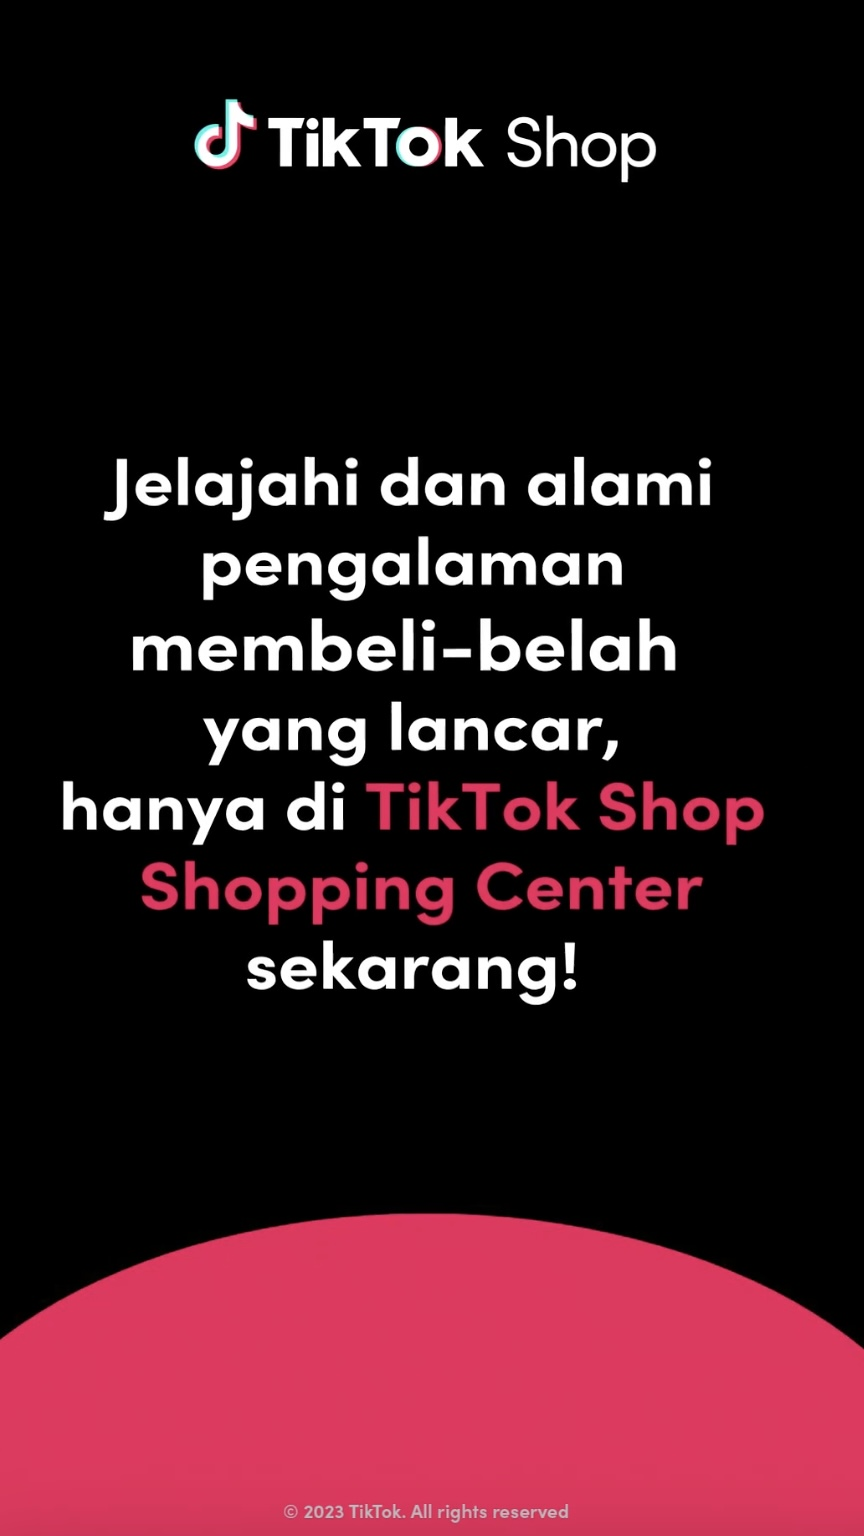 tiktok shop shopping center 3